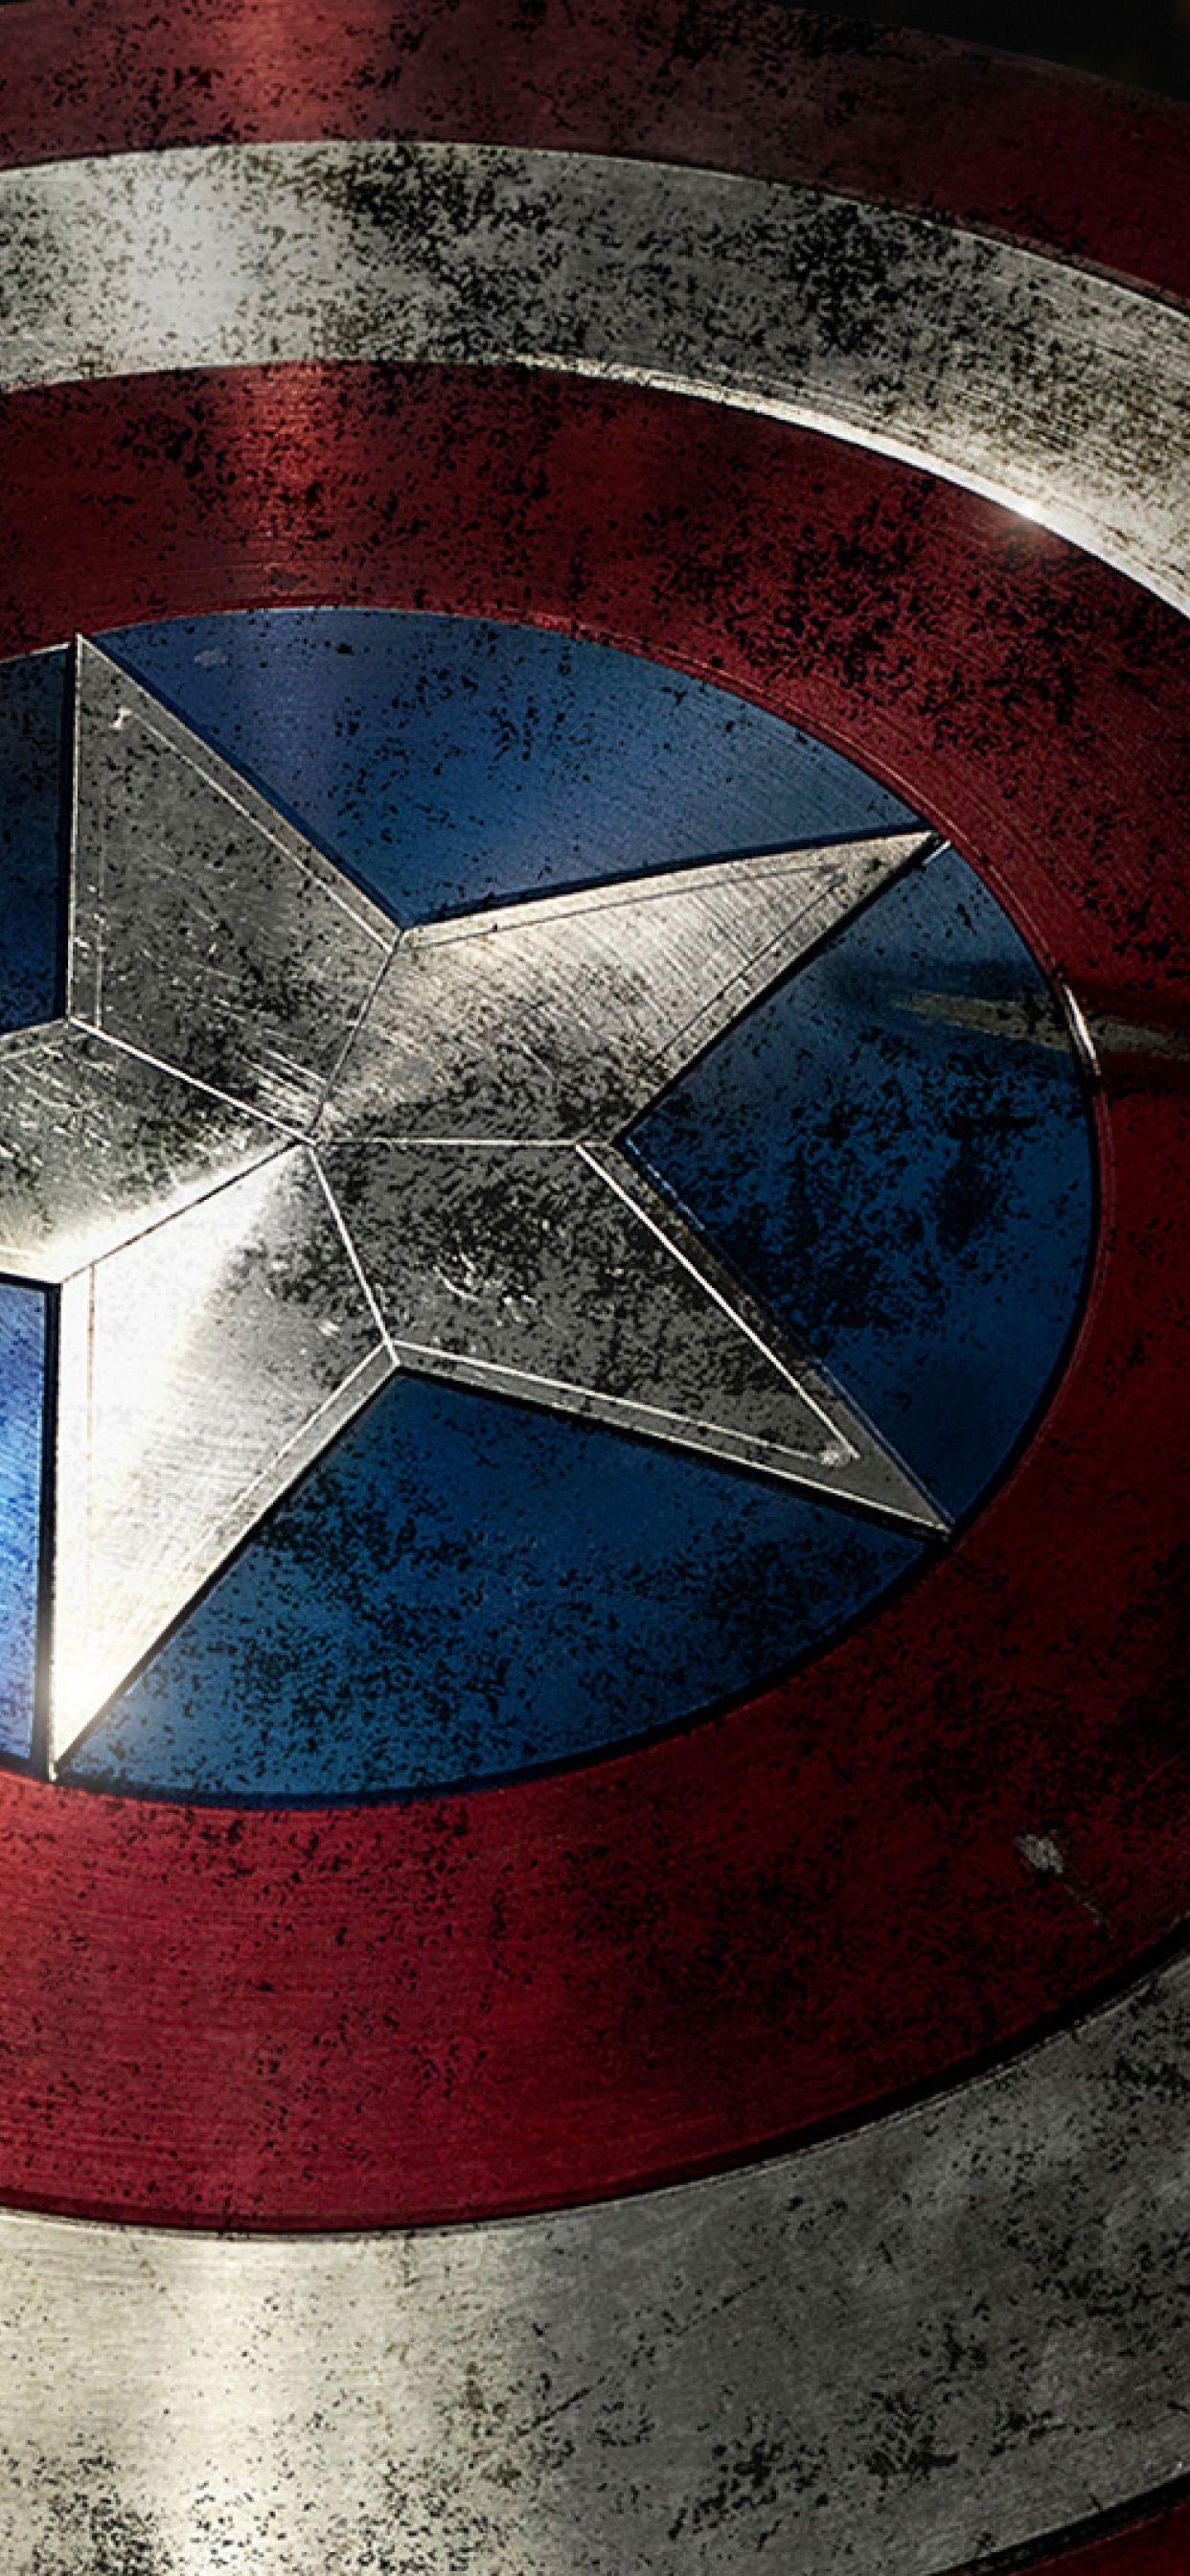 Captain America Shield wallpaper iPhone XS MAX